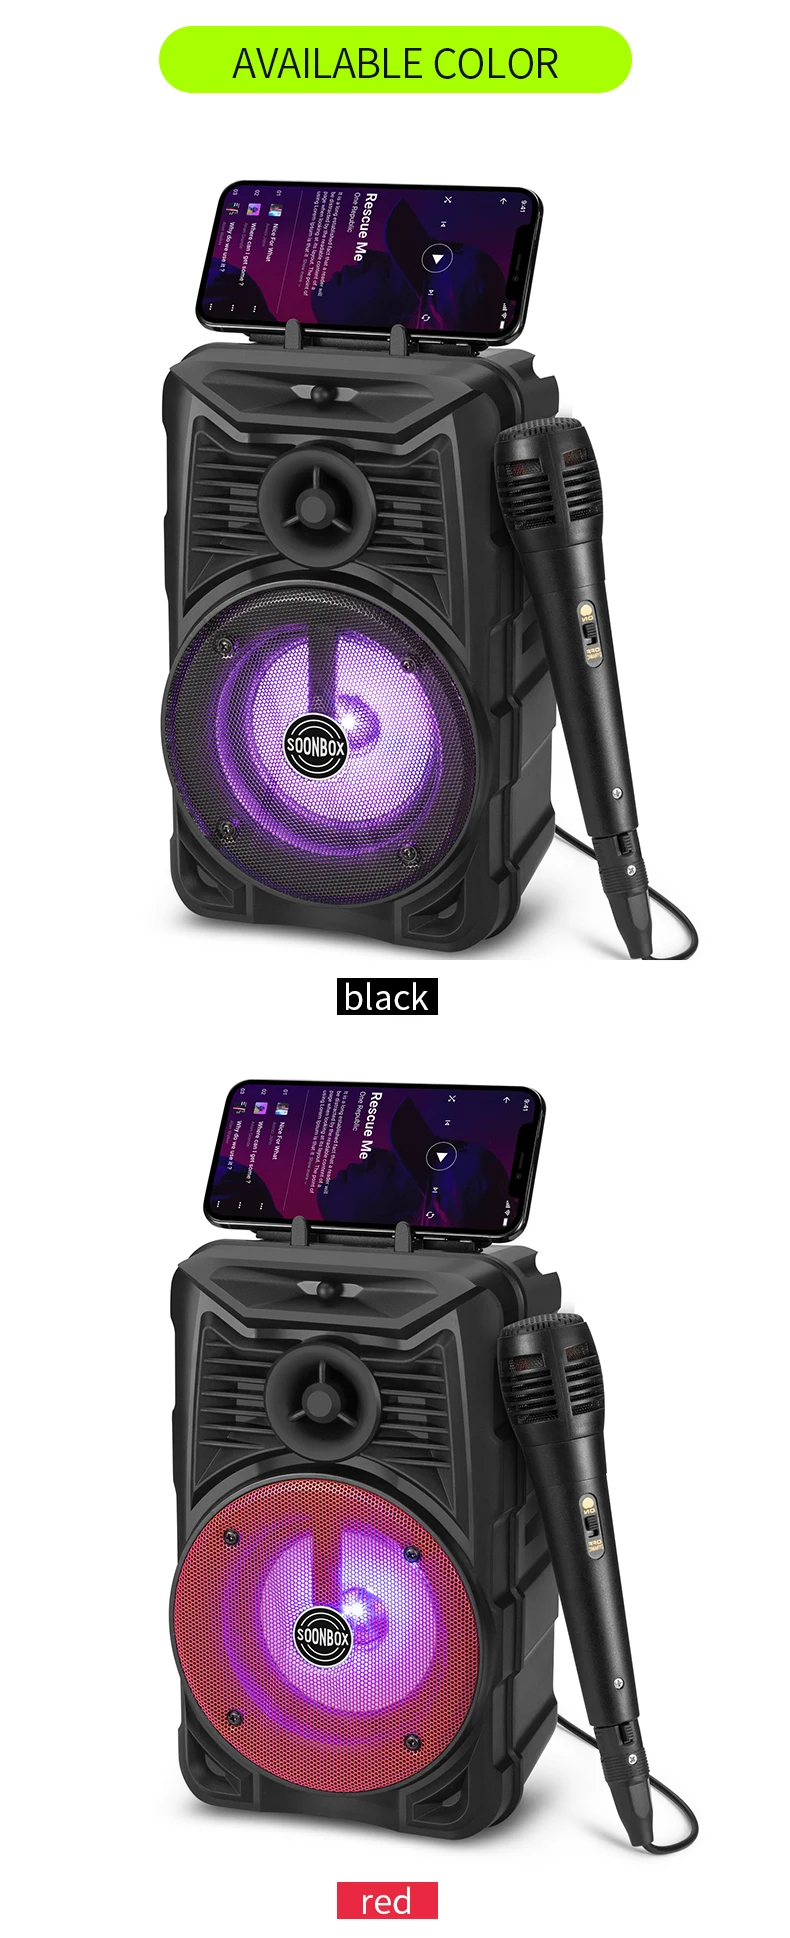 S5 SOONBOX Outdoor Bt Waterproof Super Heavy Bass Speaker Colorful Led Wireless Portable Karaoke Speaker With Mic